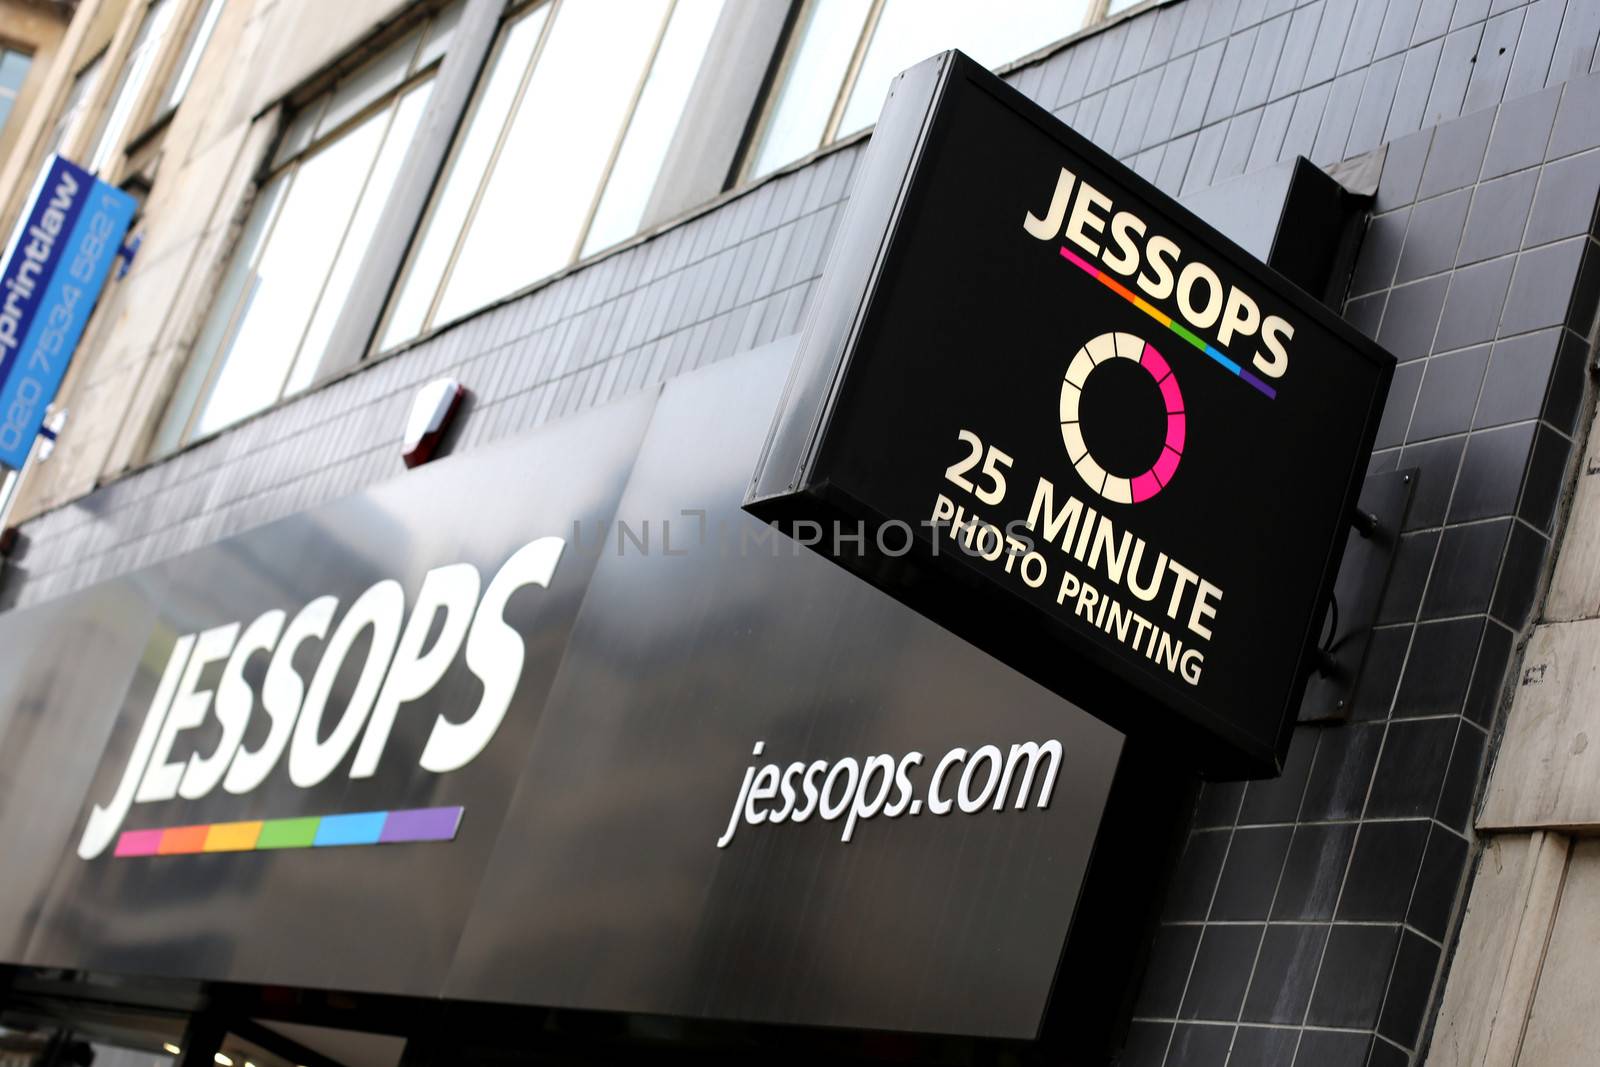 Jessops Shop Sign Oxford Street London by Whiteboxmedia